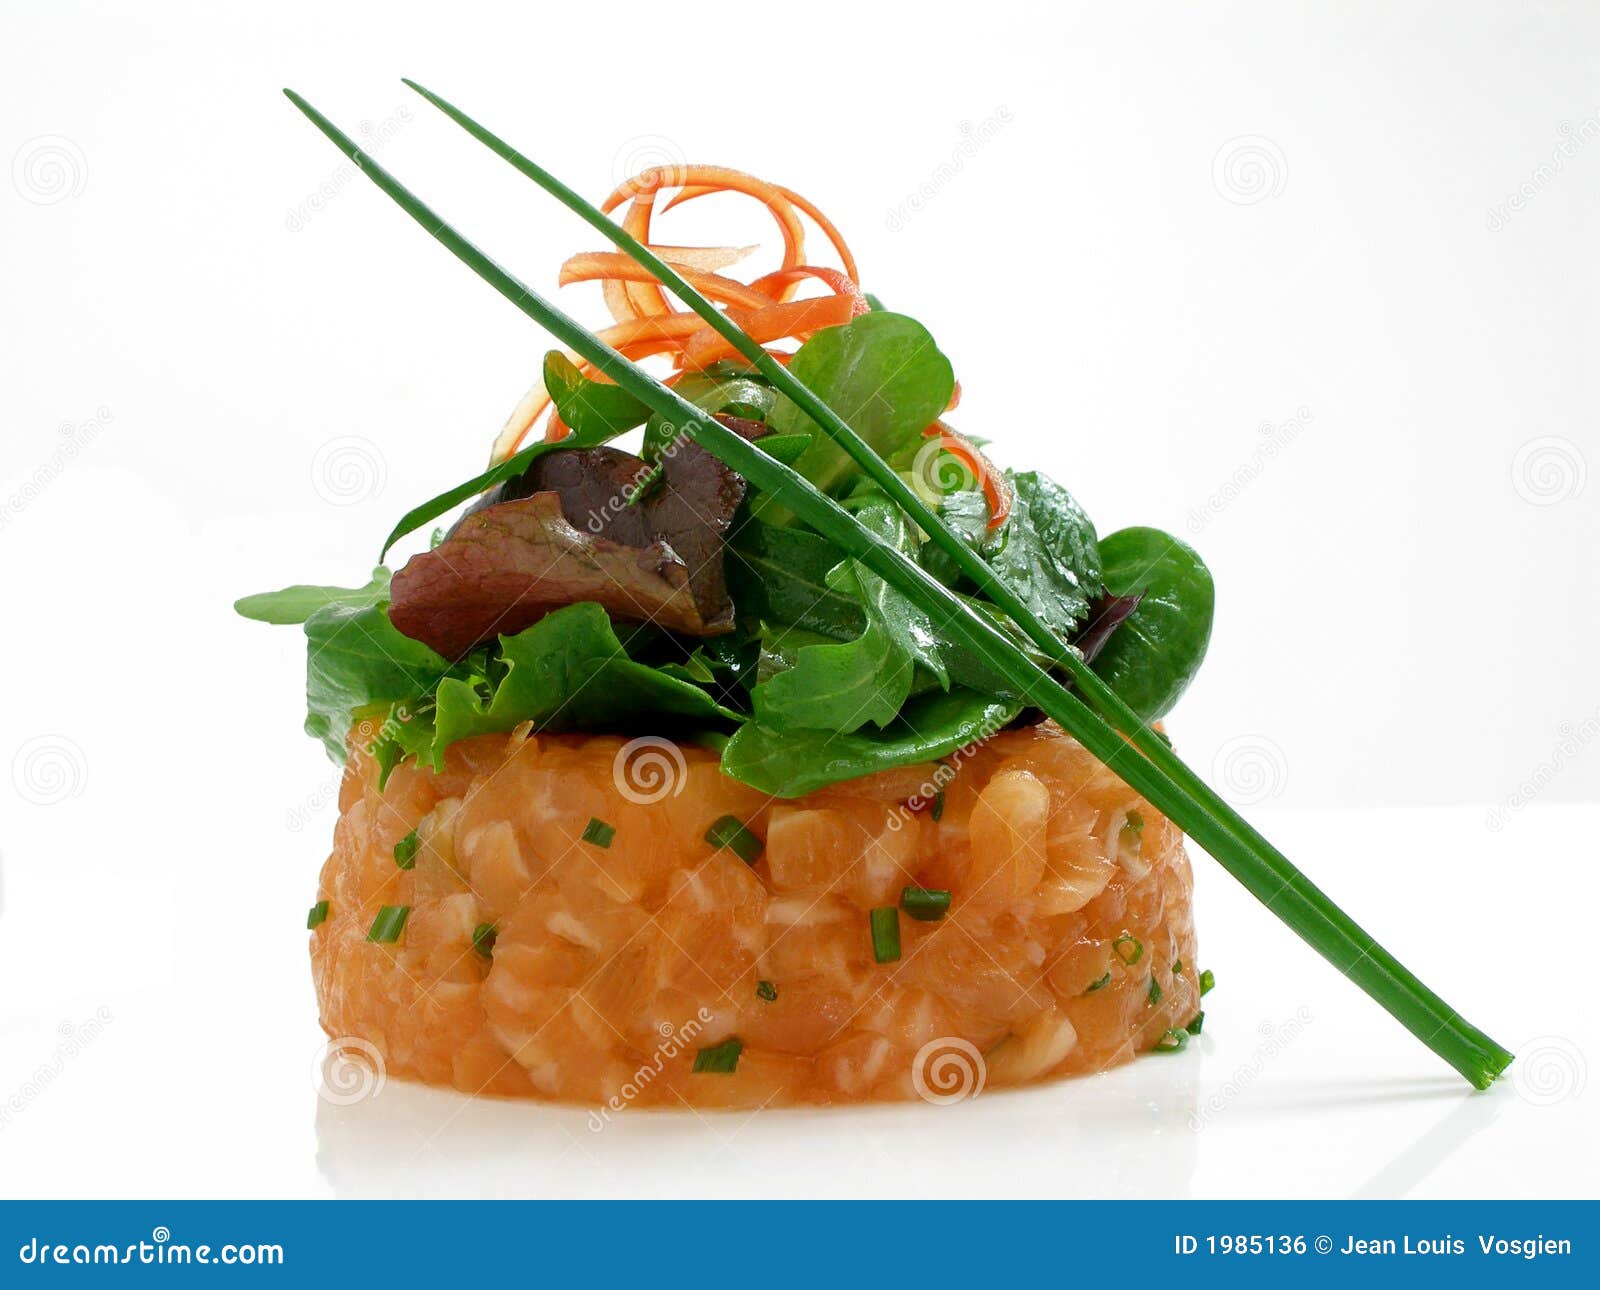 salmon tartar with salad 2